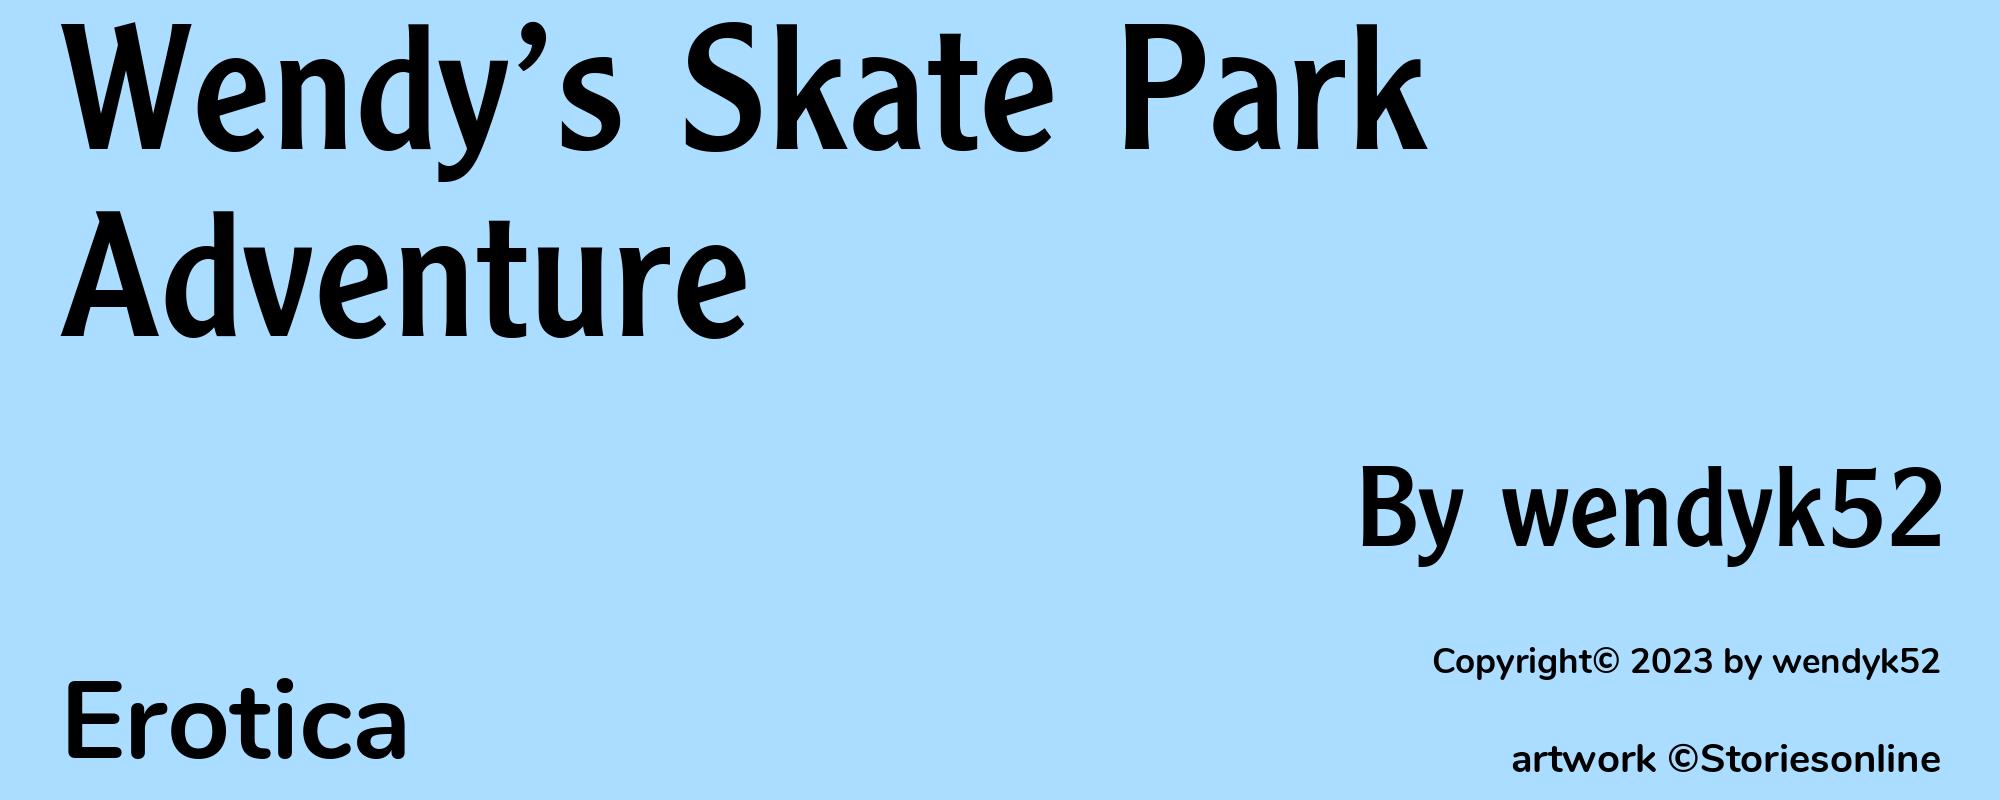 Wendy’s Skate Park Adventure - Cover